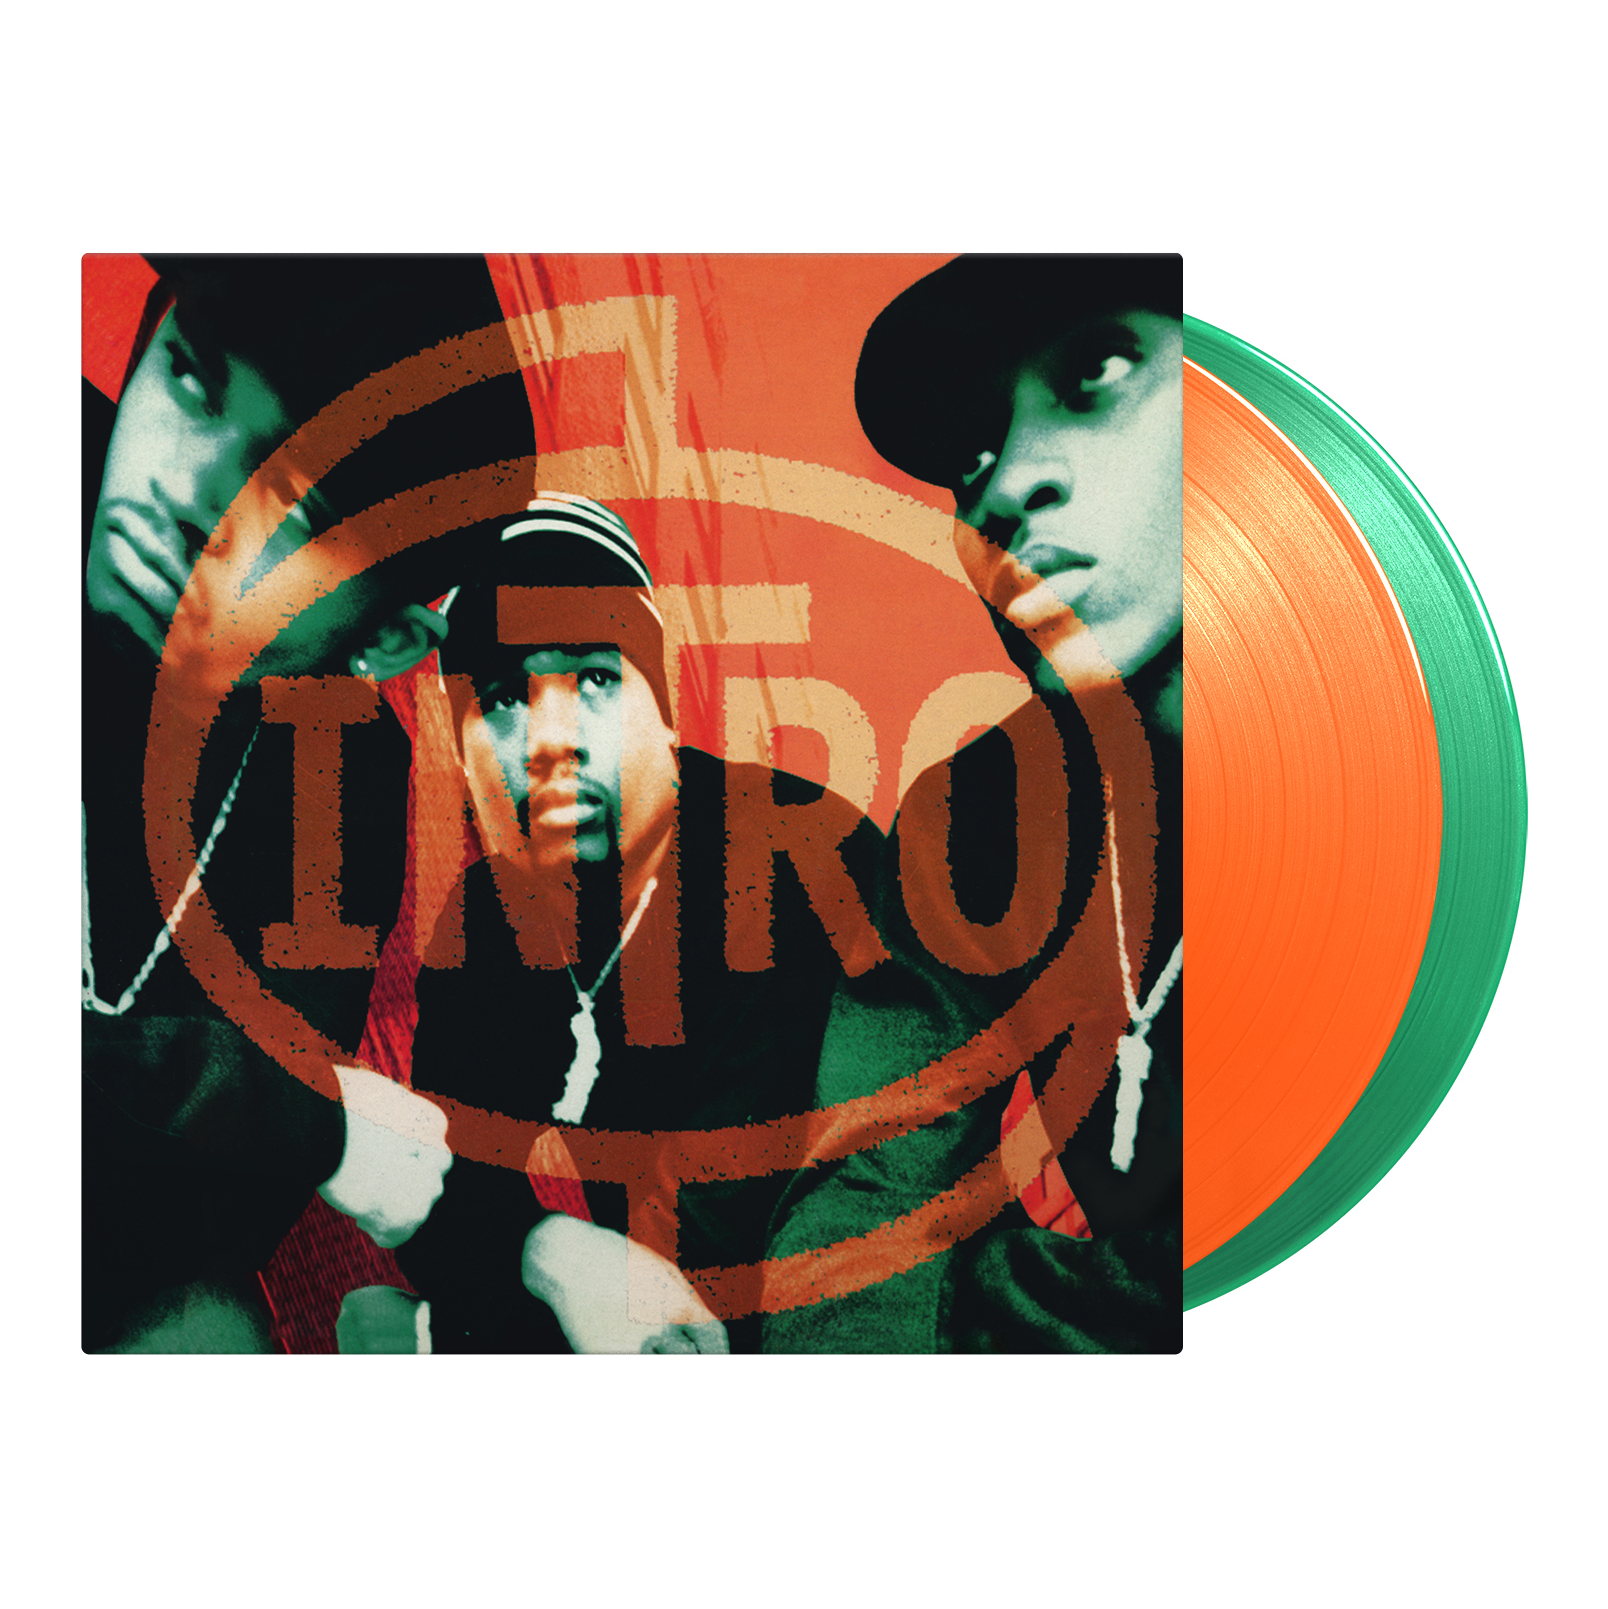 Intro - Intro (30th Anniversary Edition): Limited Orange/Green Vinyl 2LP